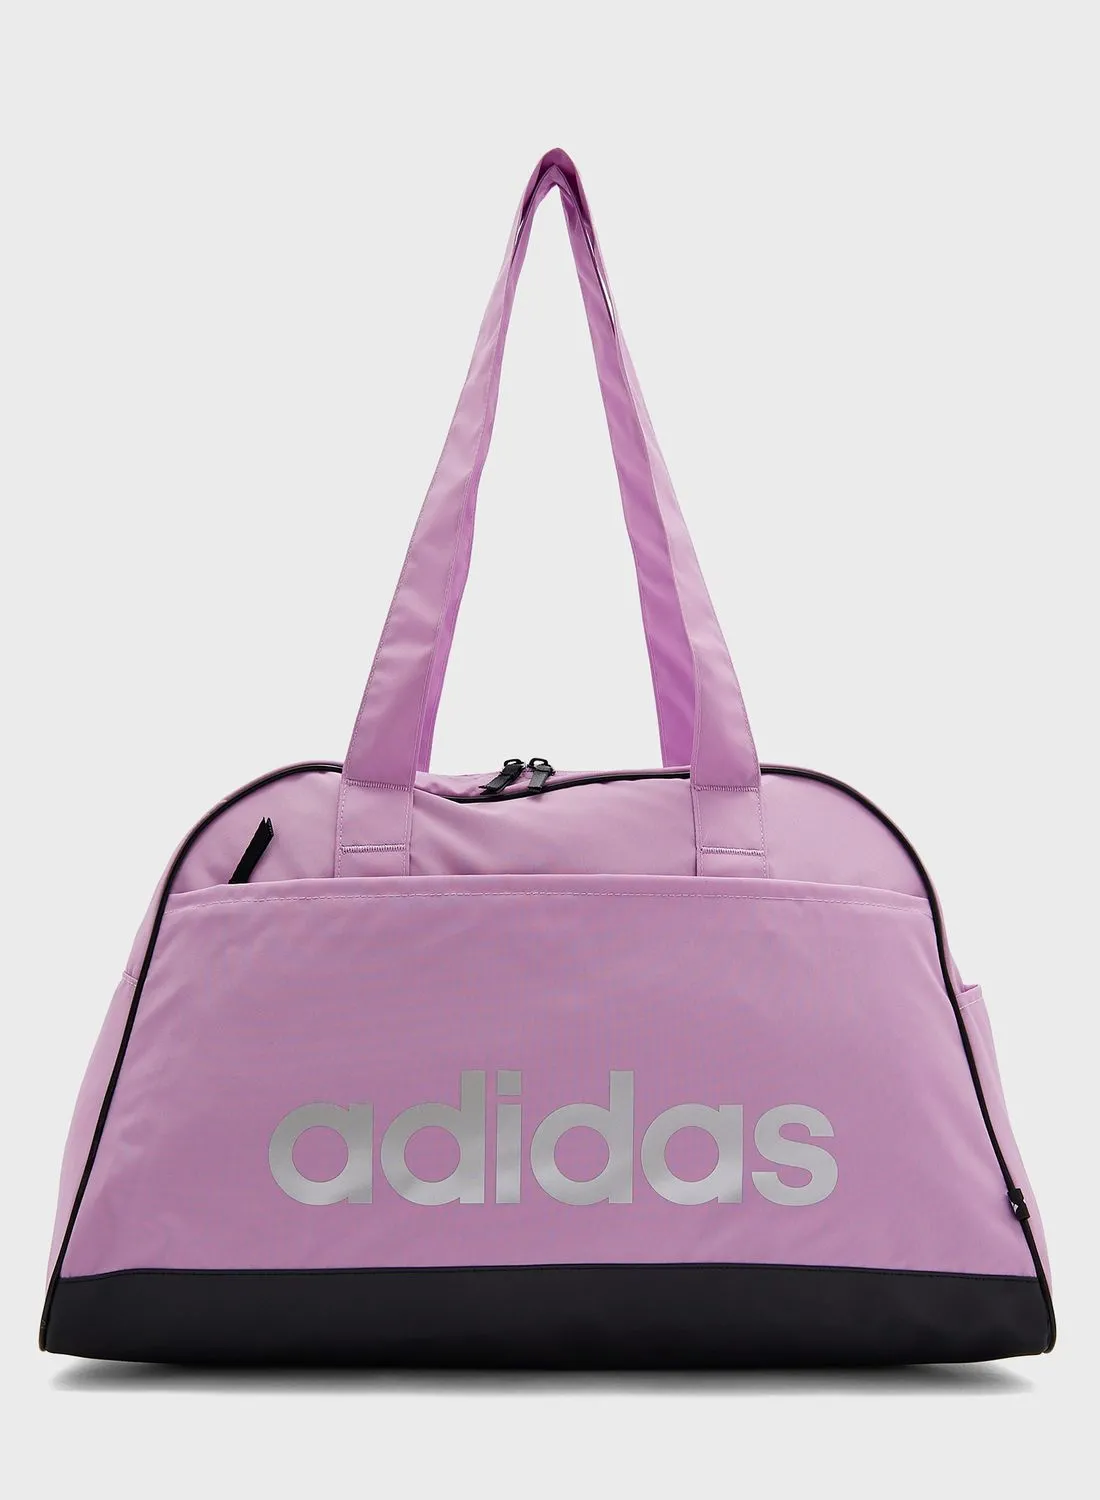 Adidas Essential Sport Backpack